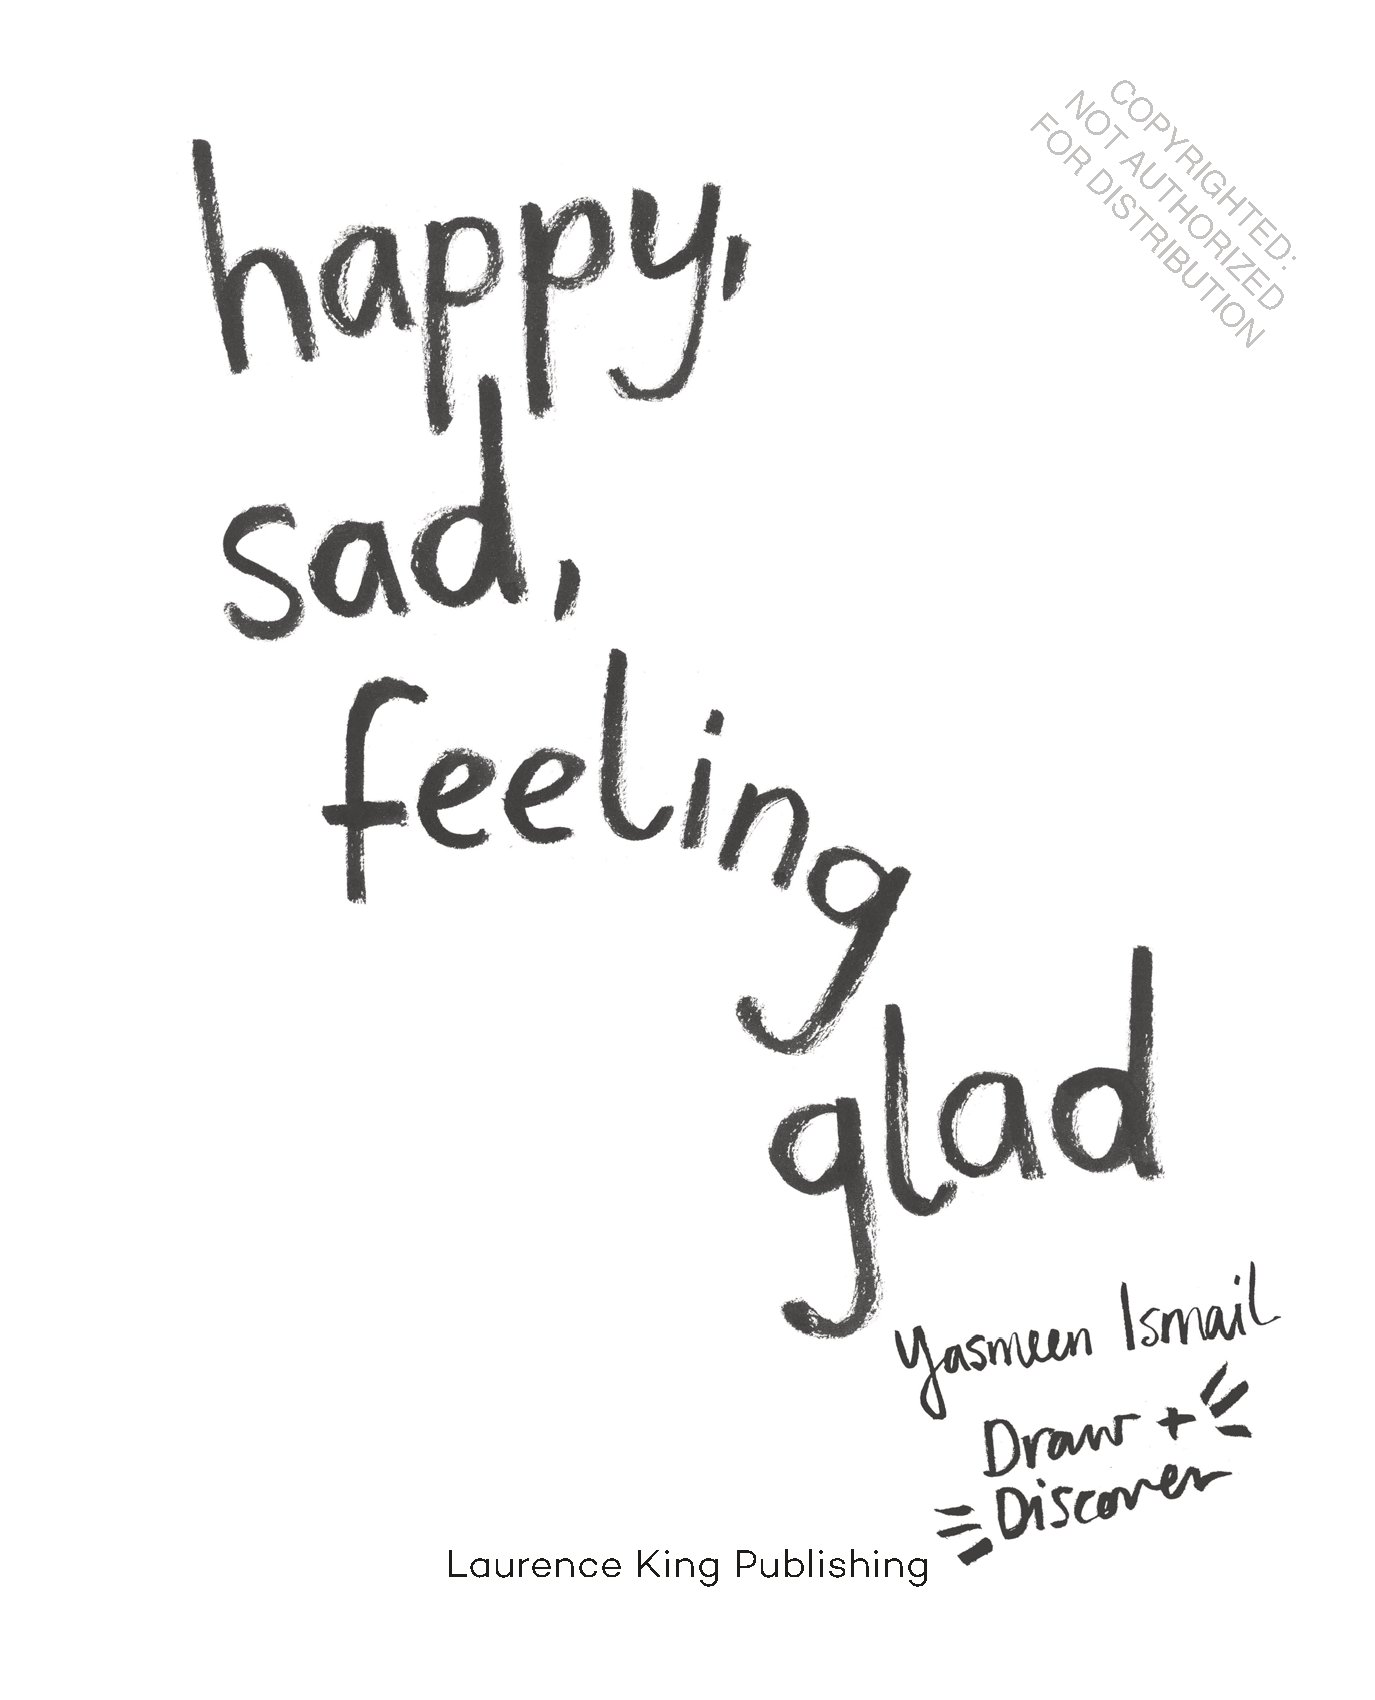 Happy, Sad, Feeling Glad